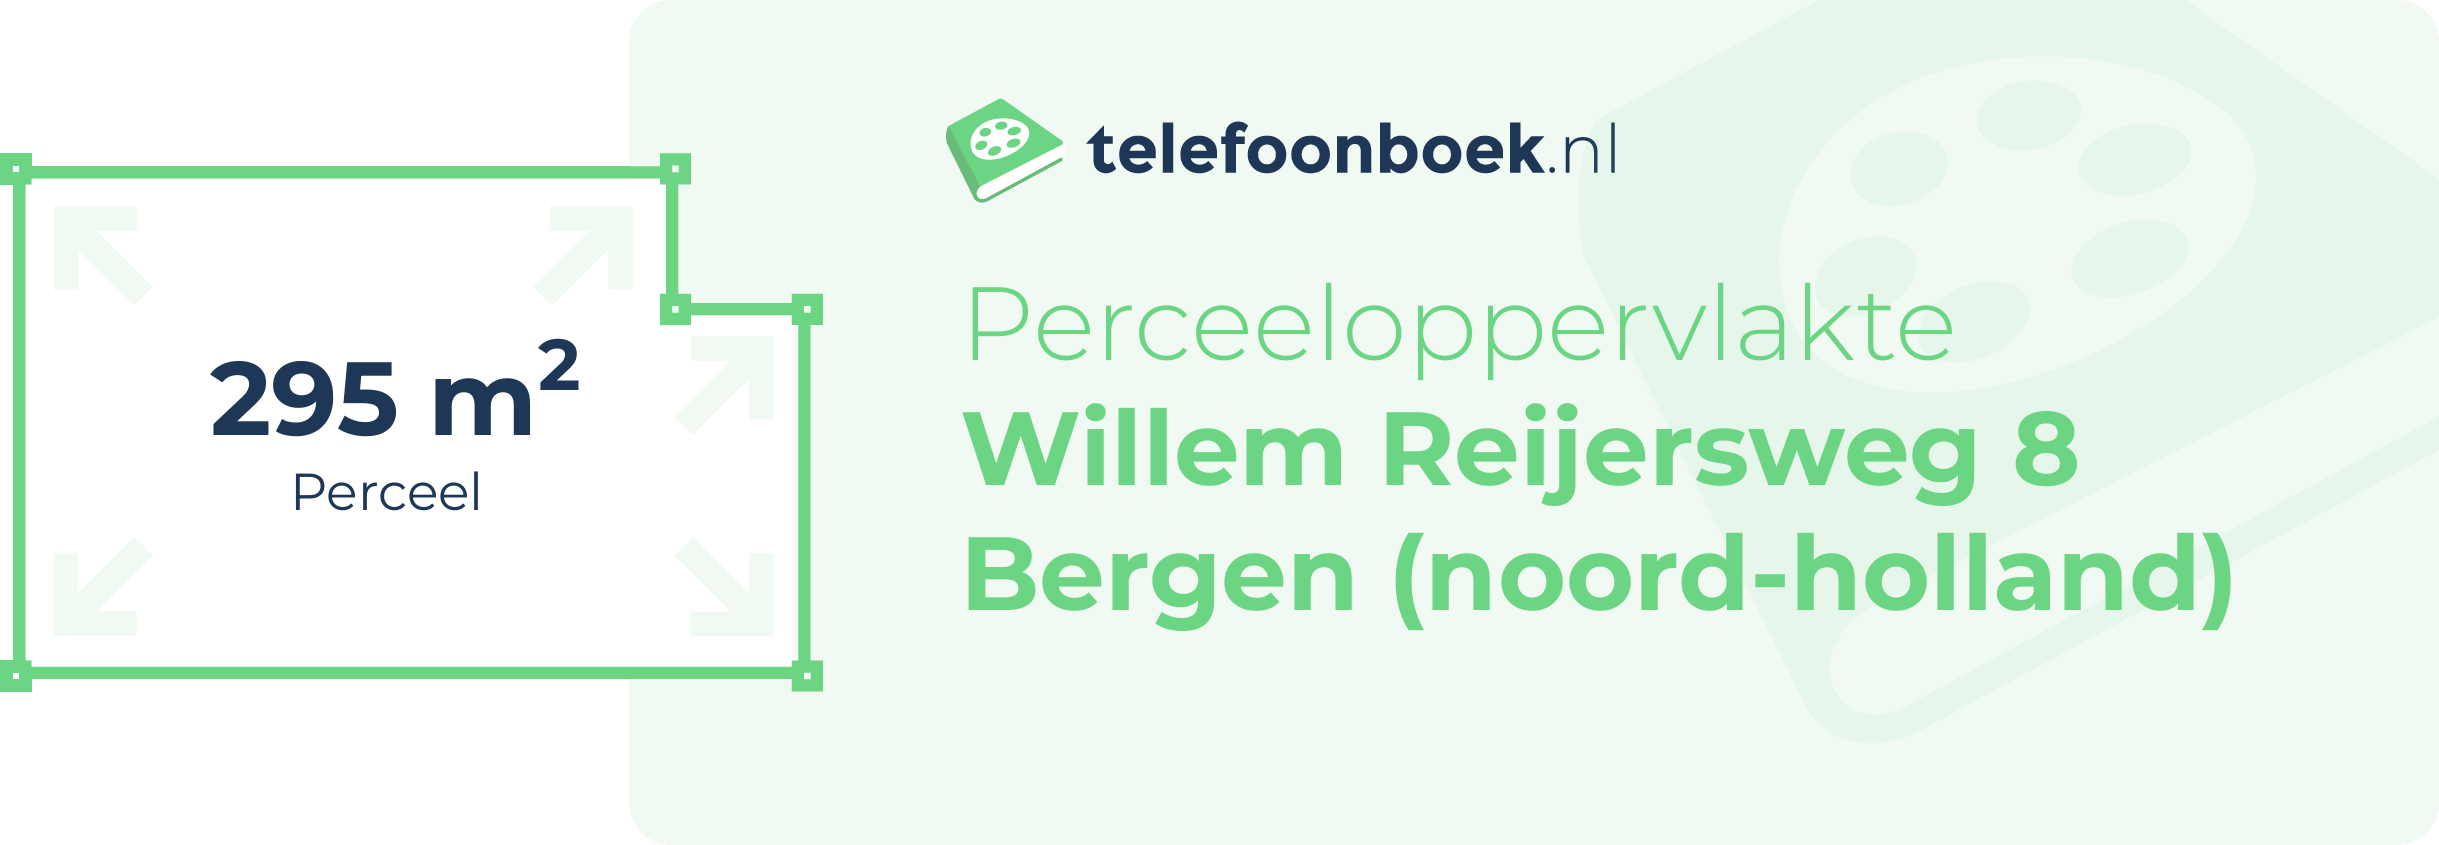 Perceeloppervlakte Willem Reijersweg 8 Bergen (Noord-Holland)